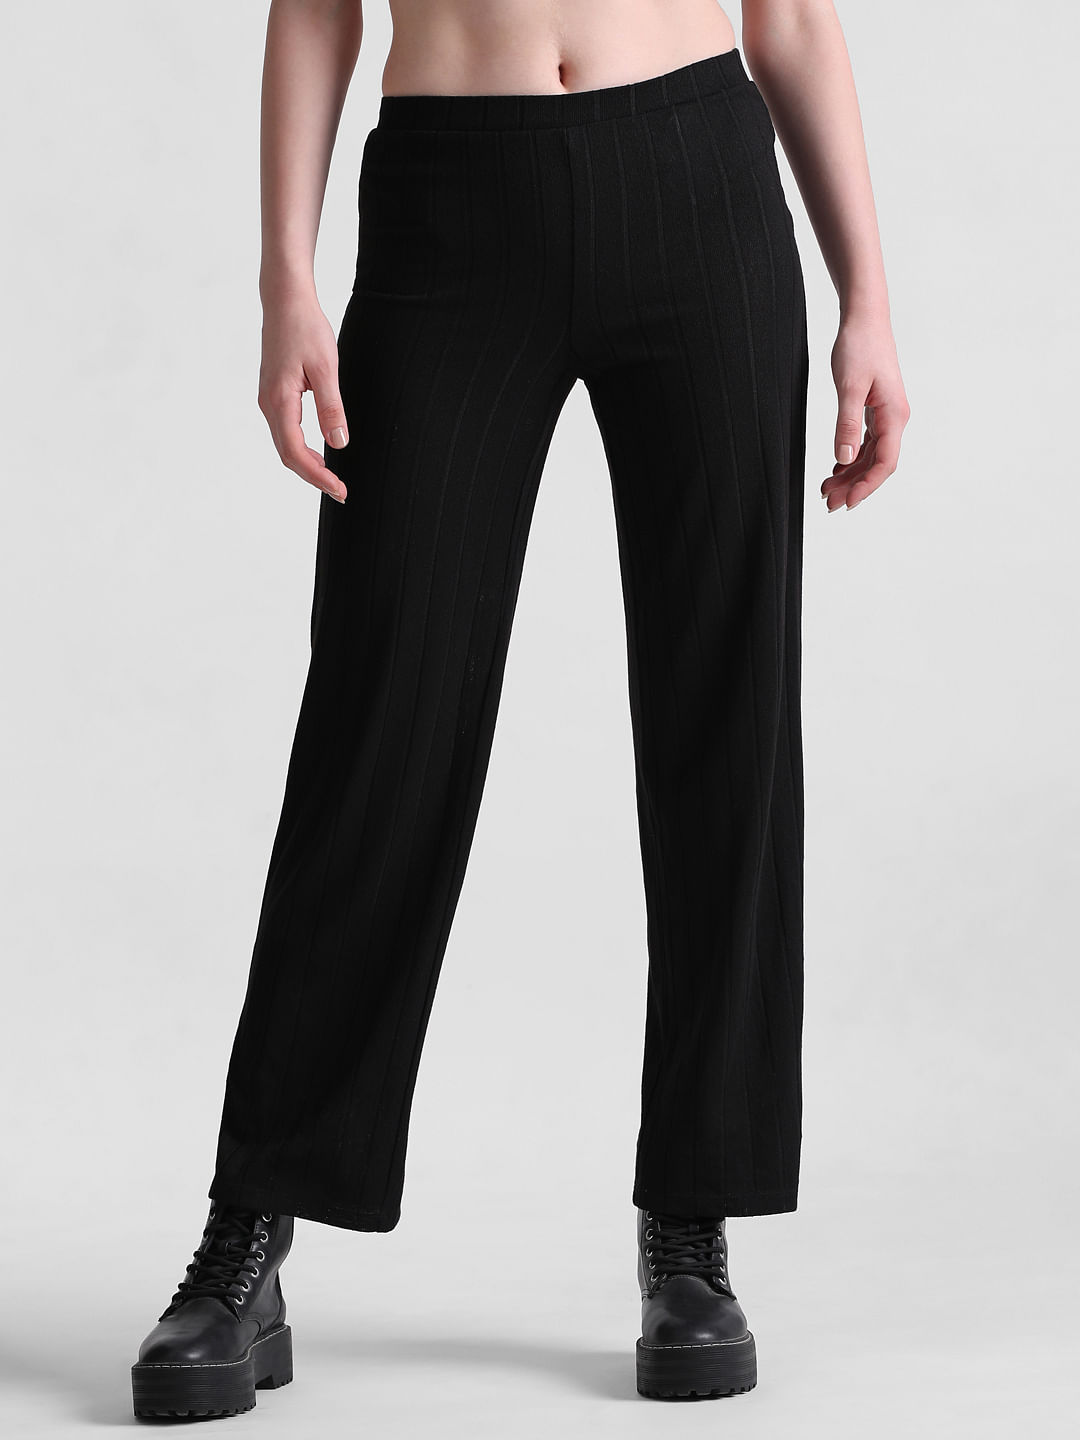 Buy YSJ Women's Knitted Wide Leg Long Pants Winter Warm Sweater Trousers  (S, Gray) at Amazon.in